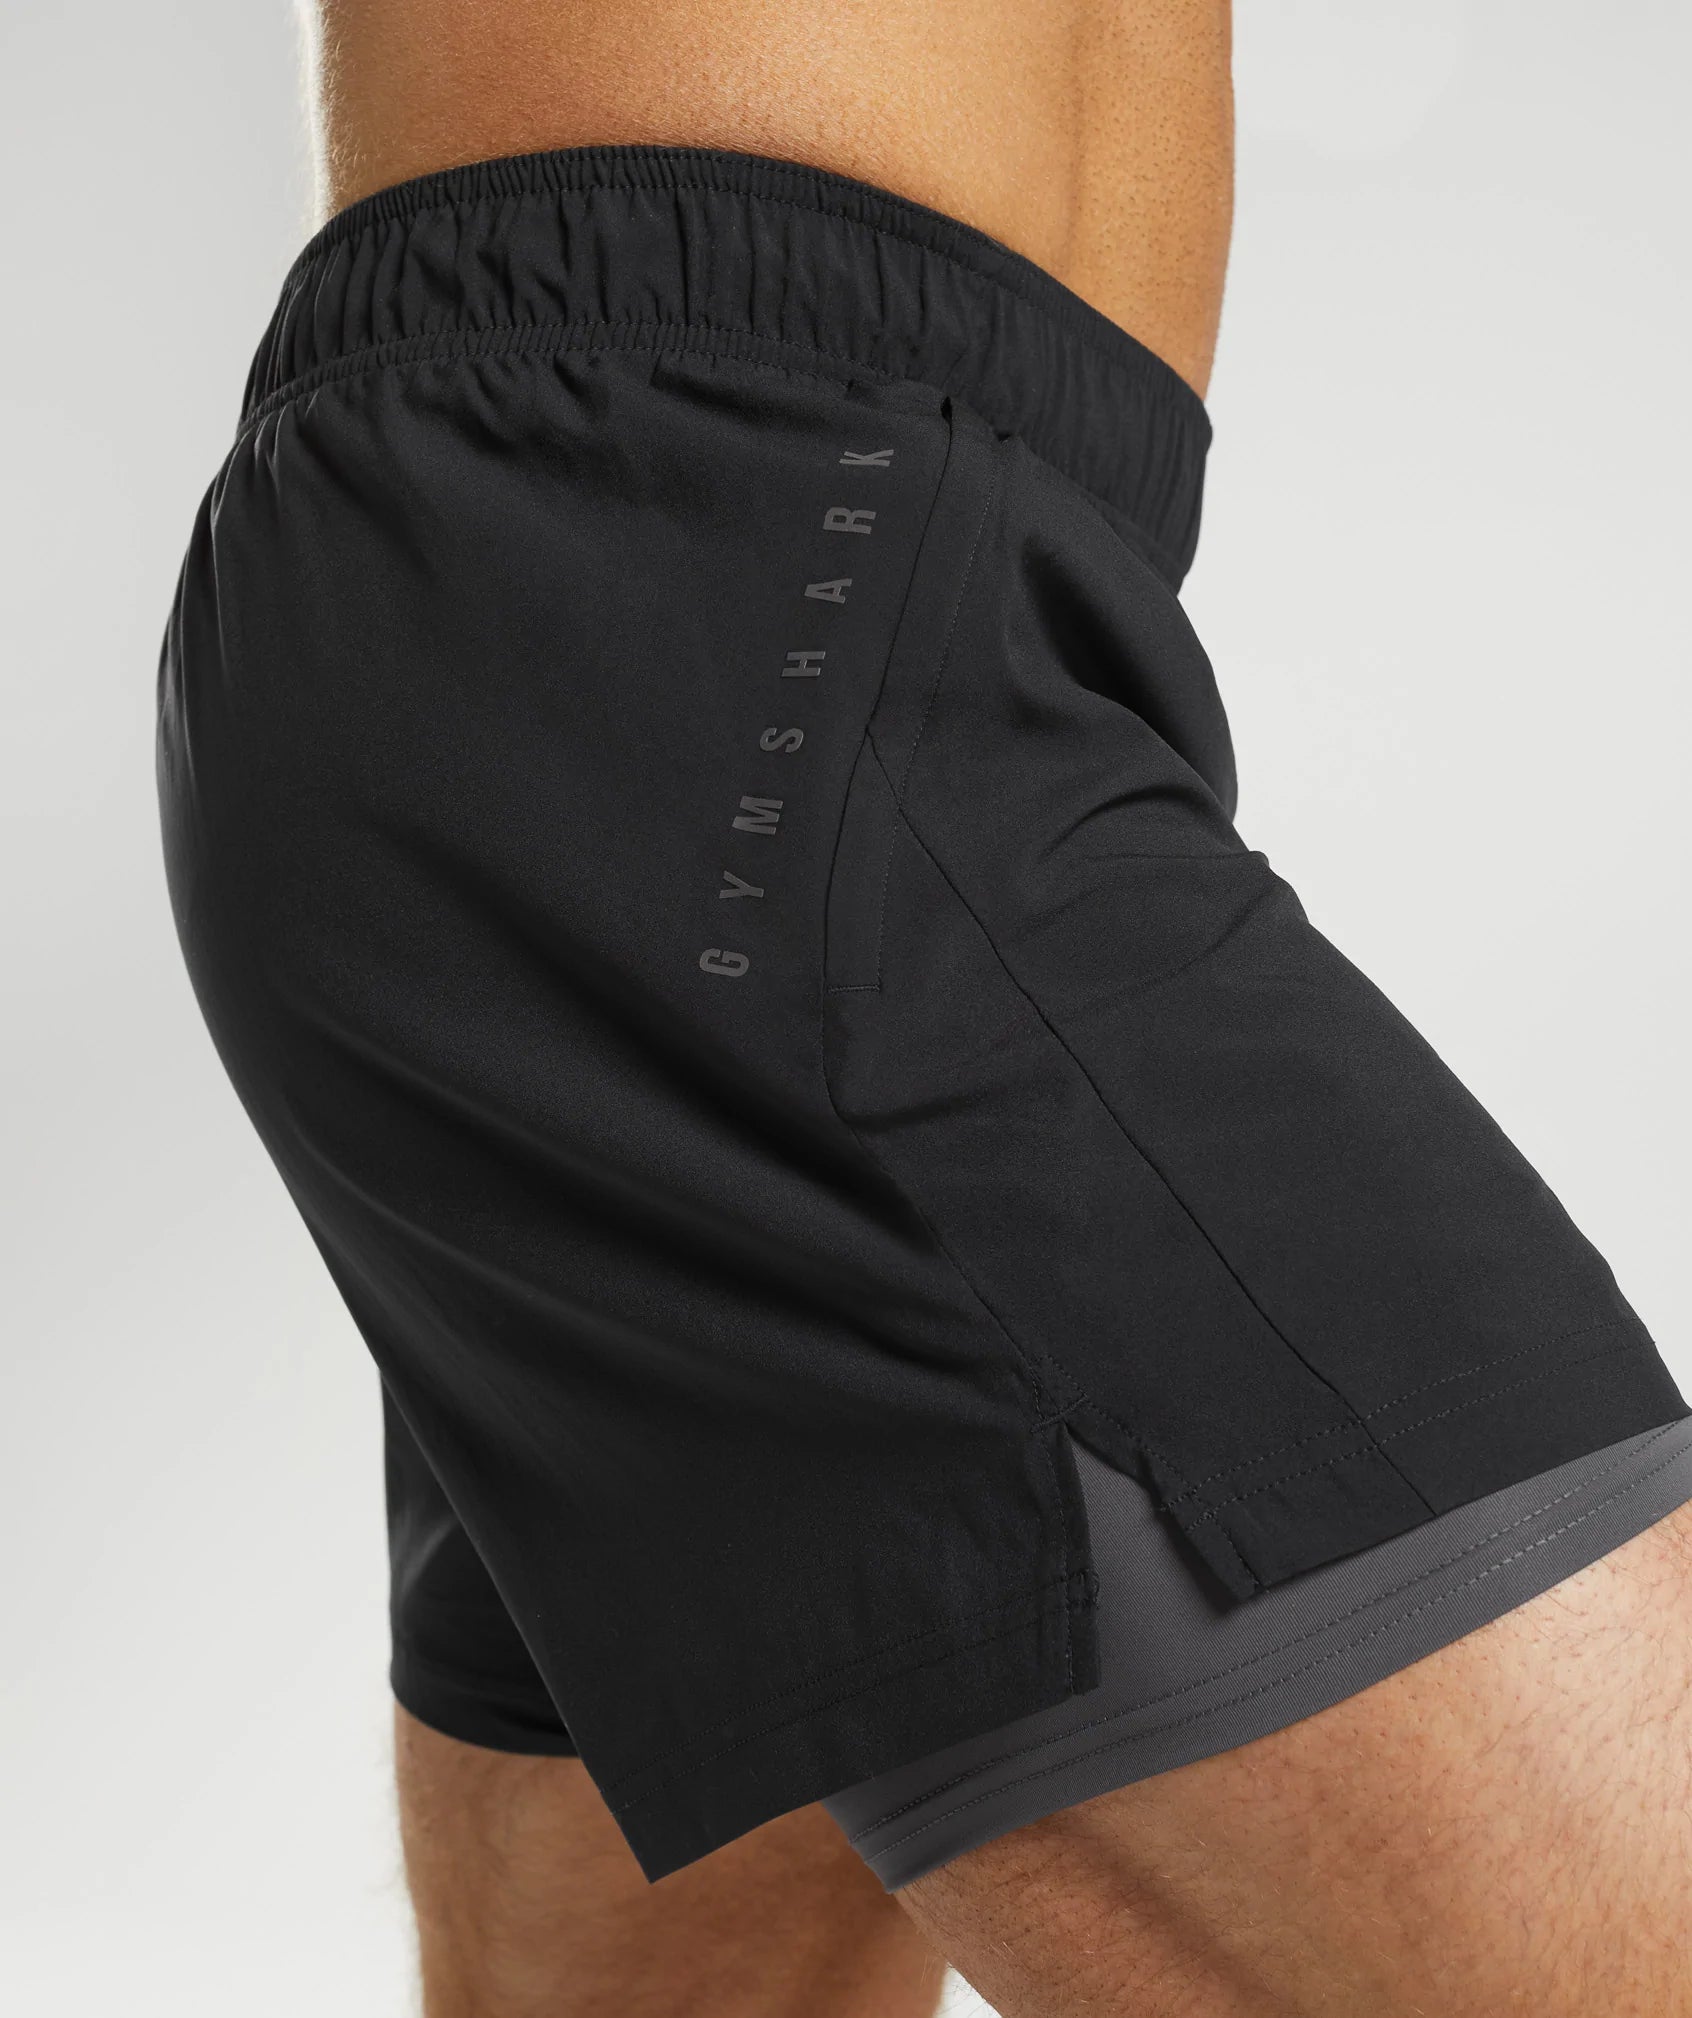 Gymshark Sport 5 Shorts - Silhouette Grey/Black